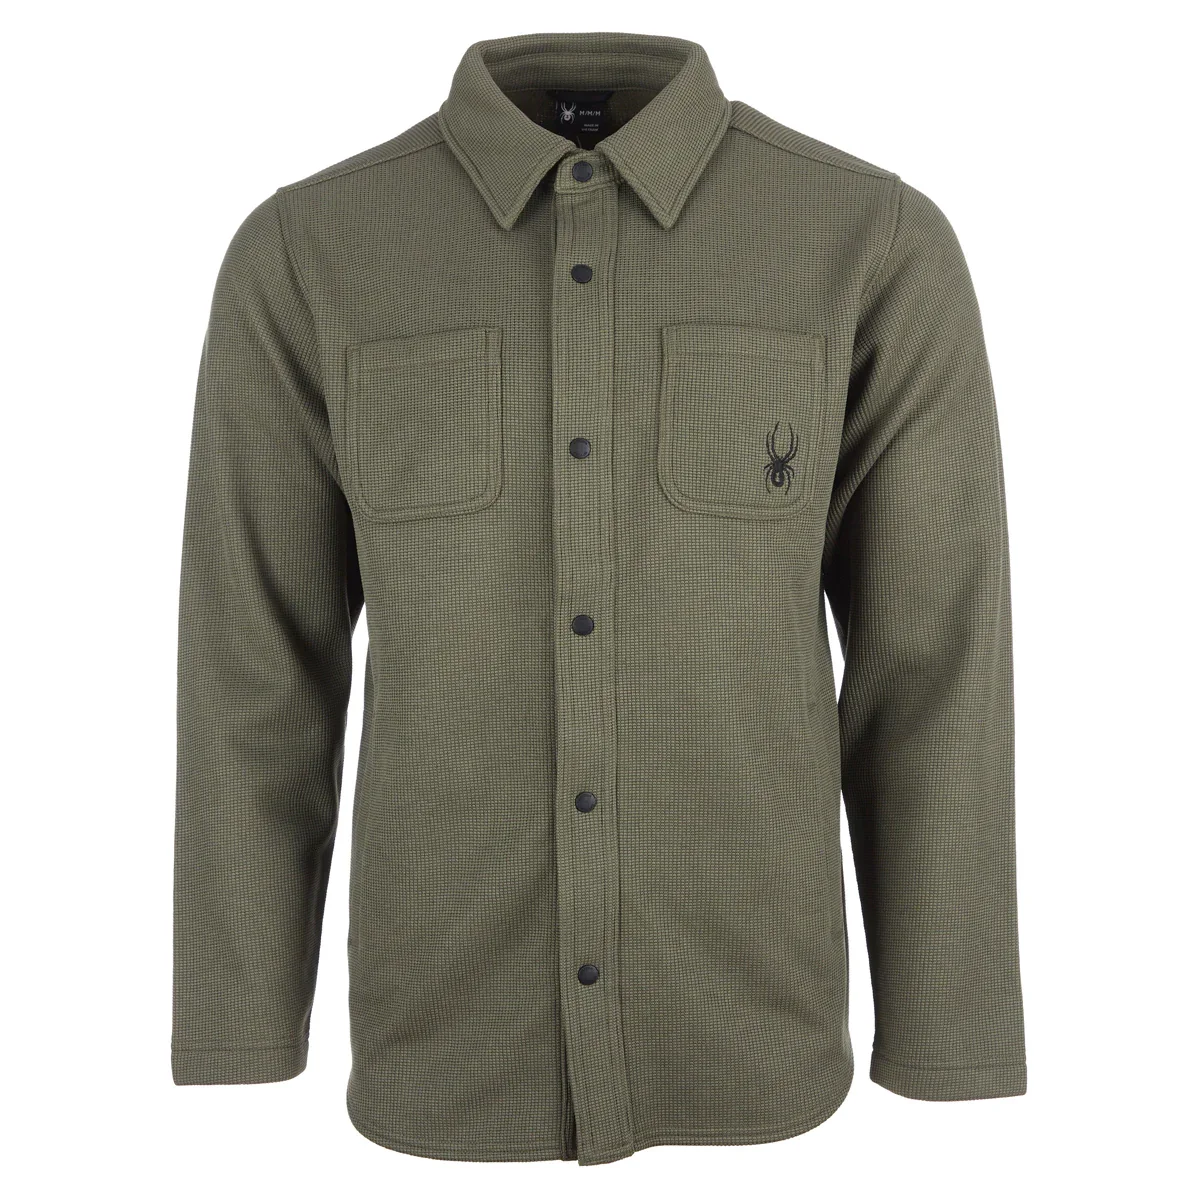 Image of Spyder Men's Avalon Shirt Jacket